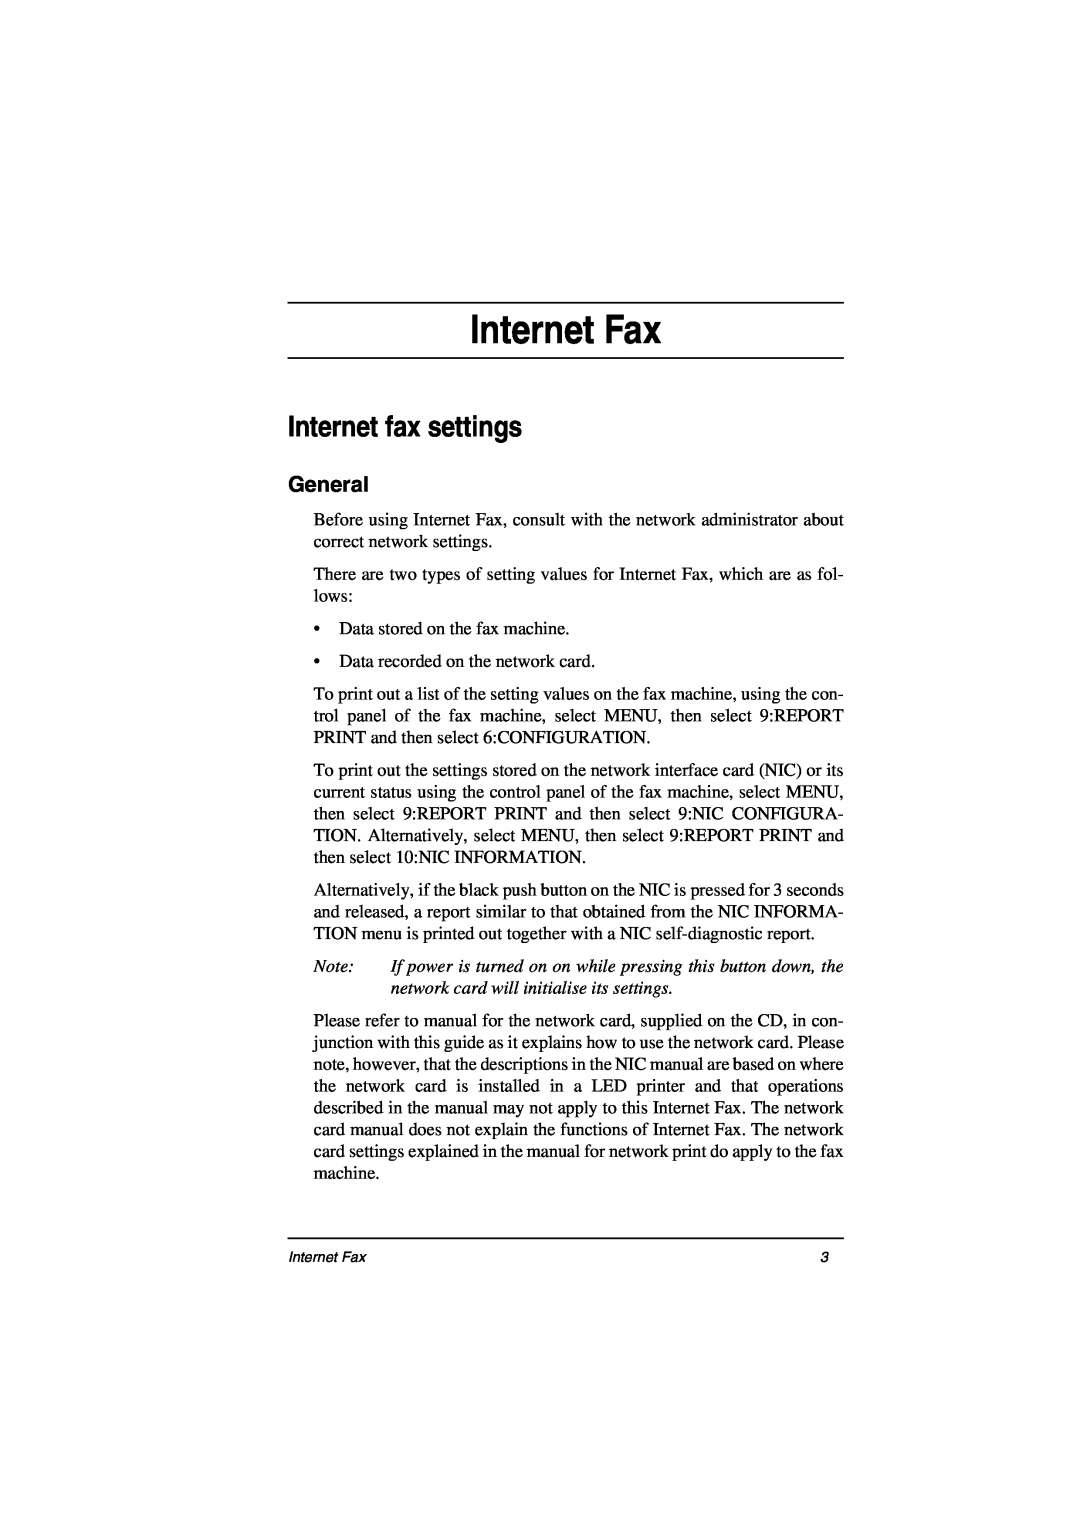 Oki ii manual Internet Fax, Internet fax settings, General 